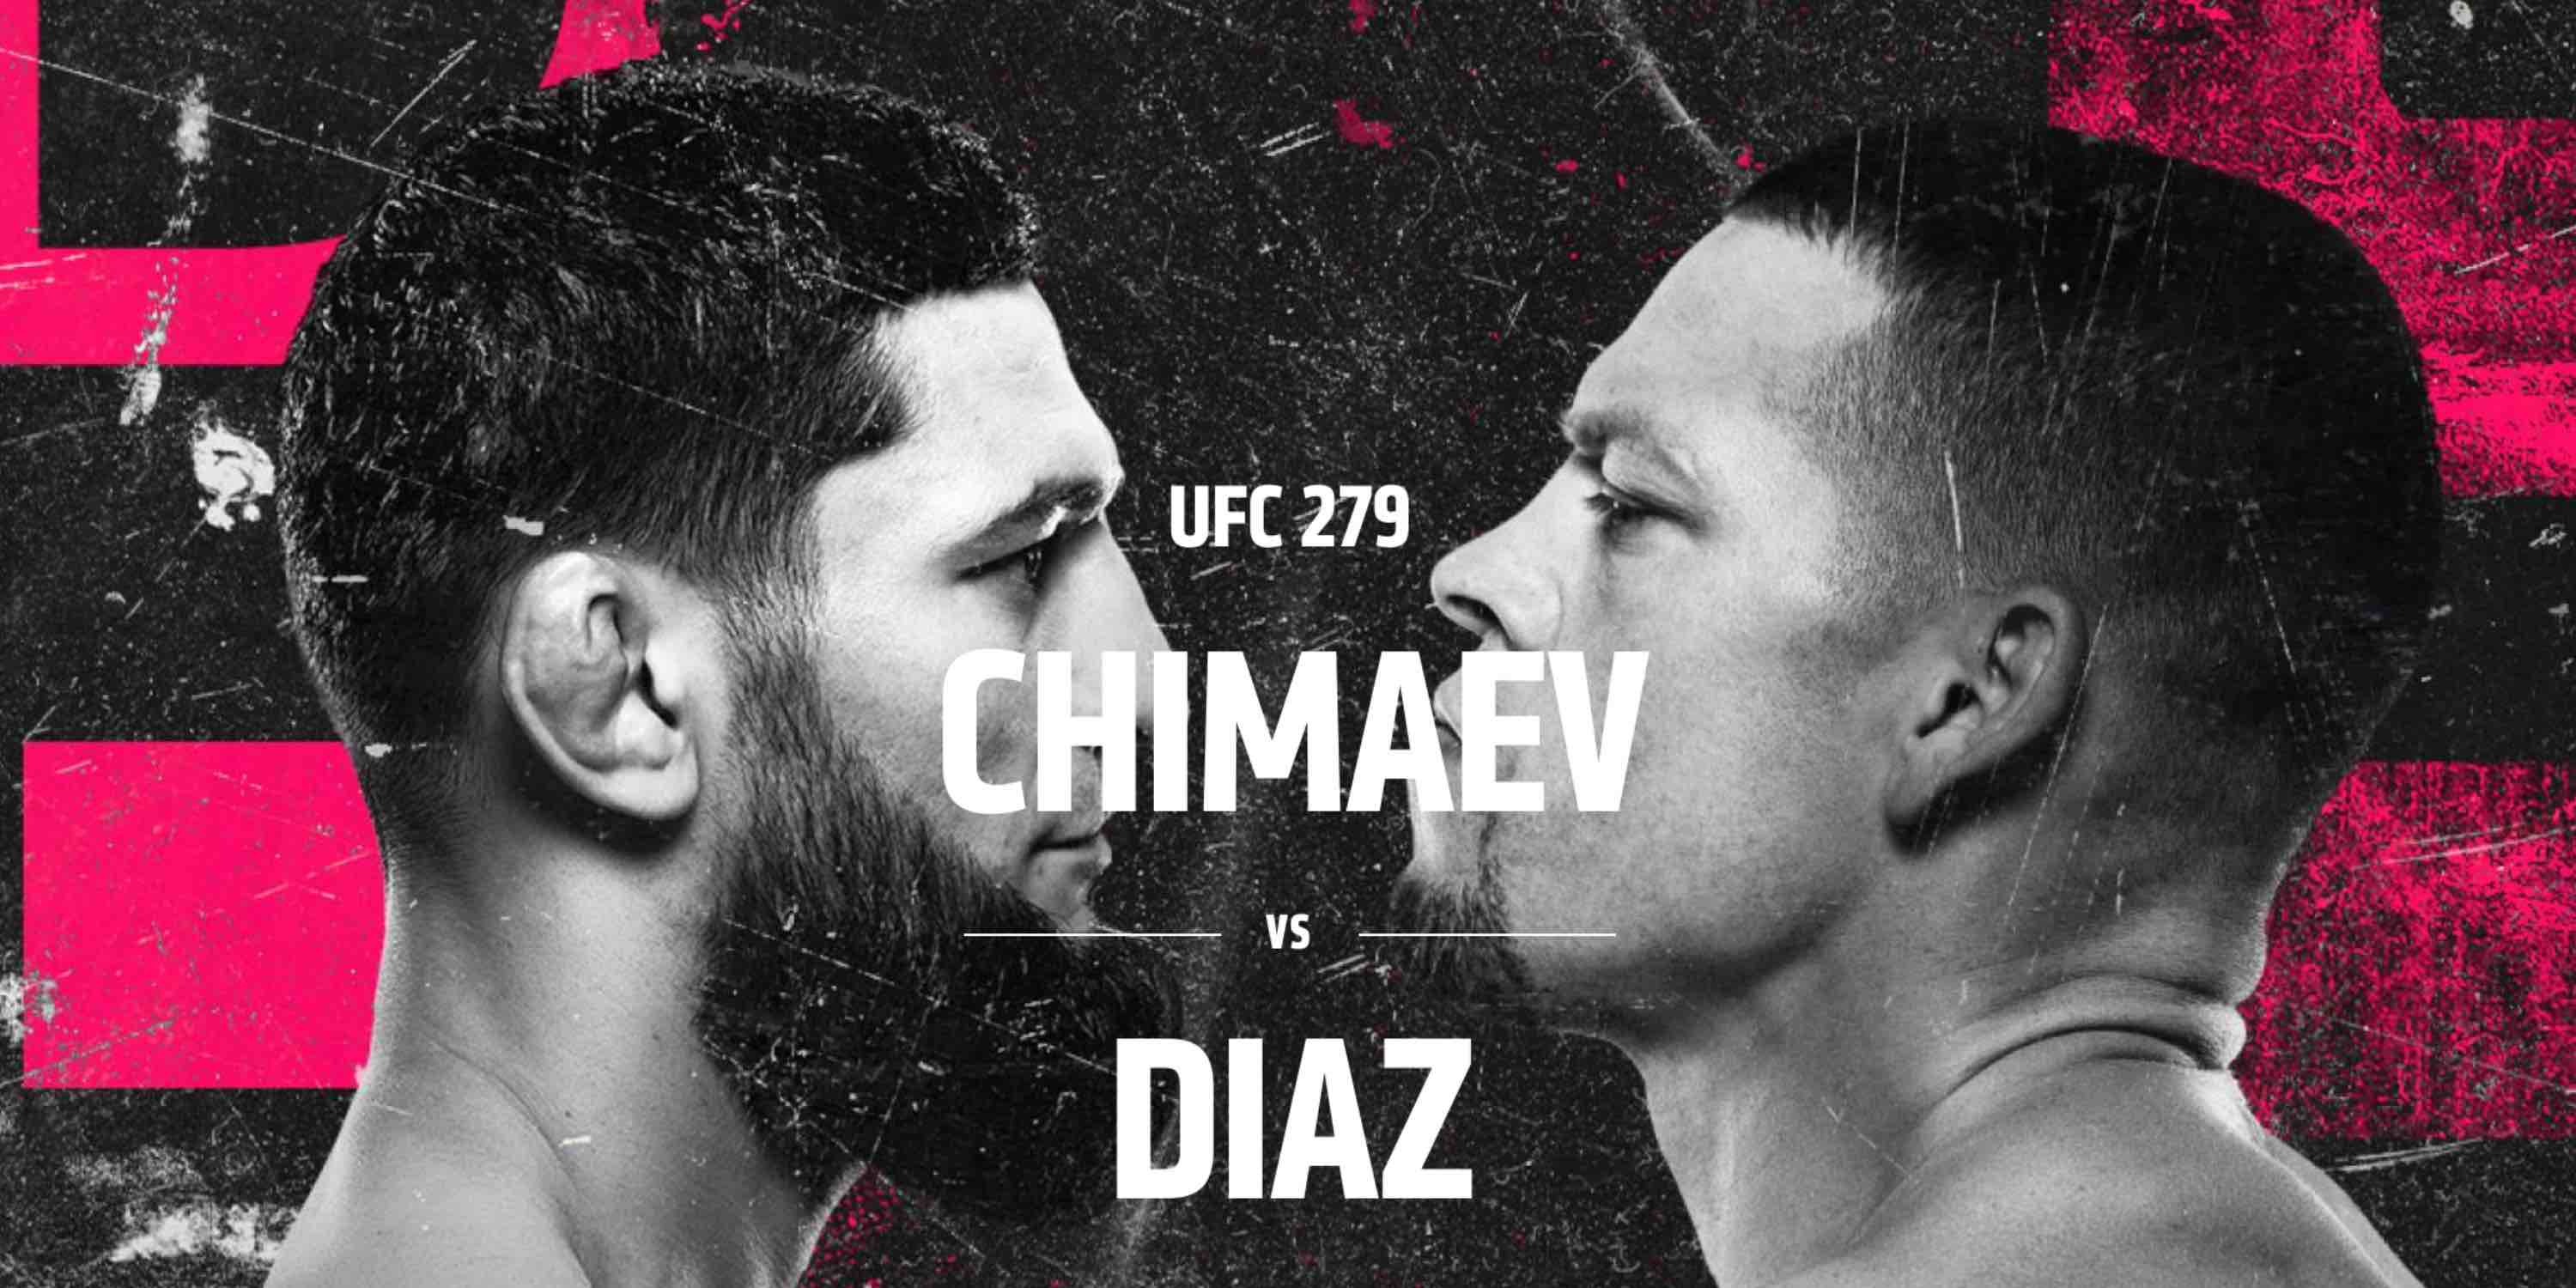 How to watch UFC 279 Chimaev vs Diaz